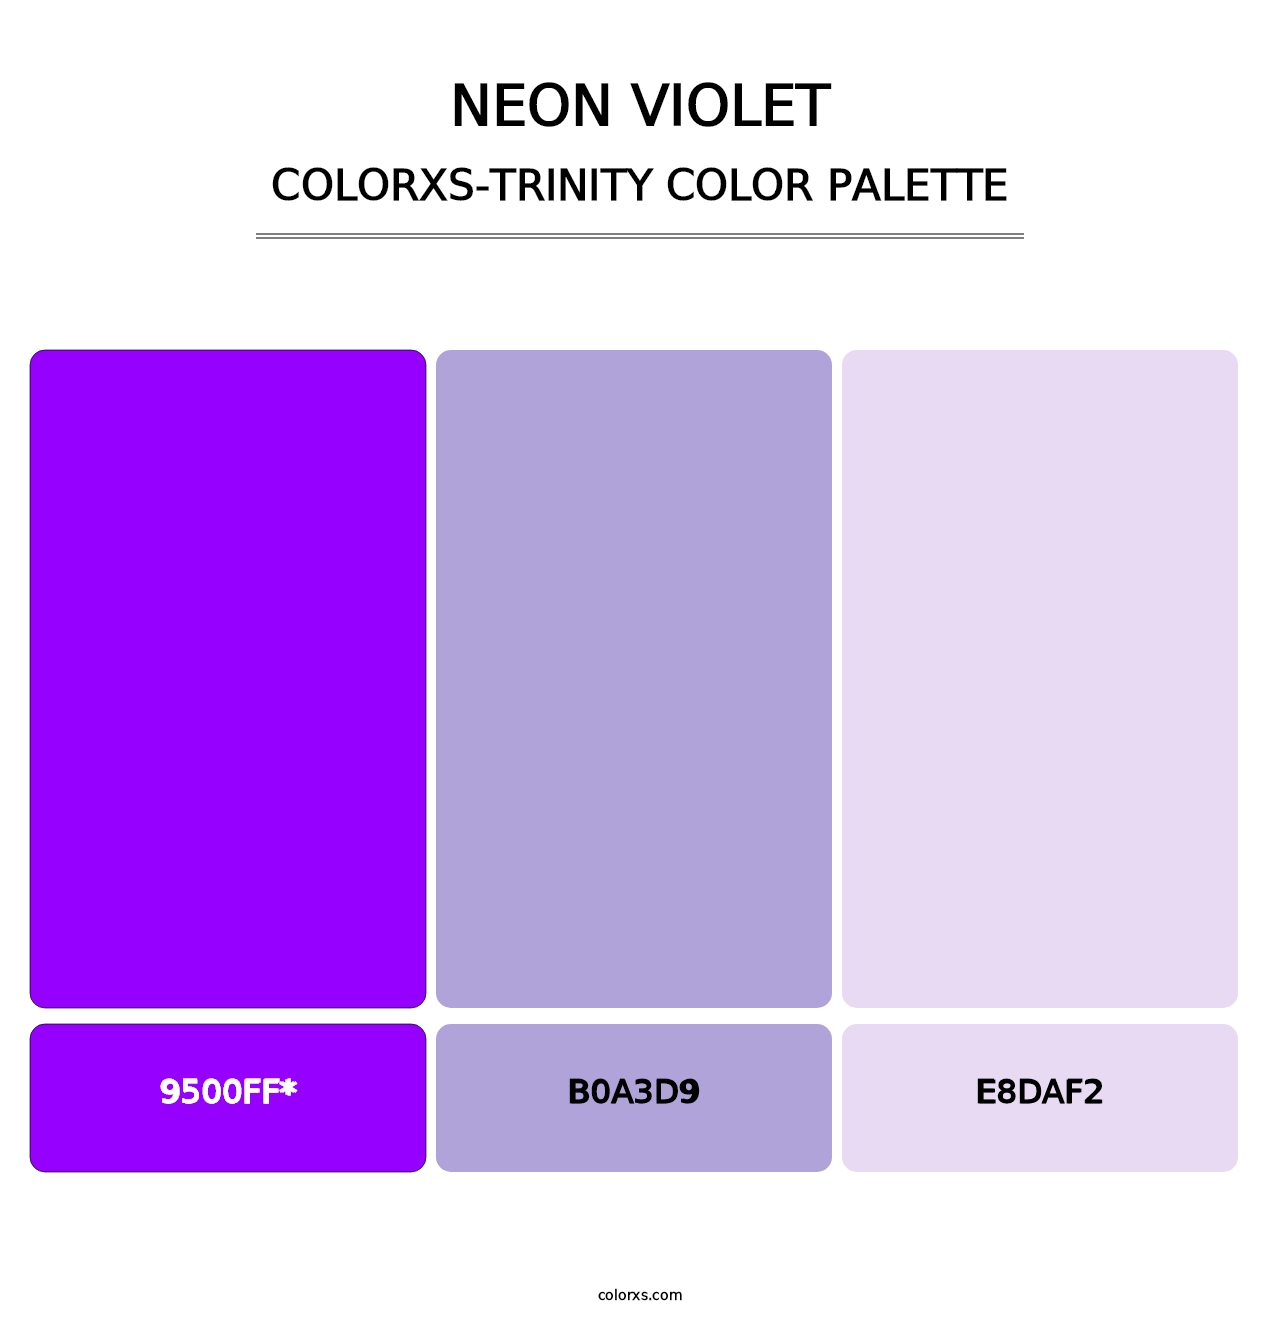 Neon Violet - Colorxs Trinity Palette